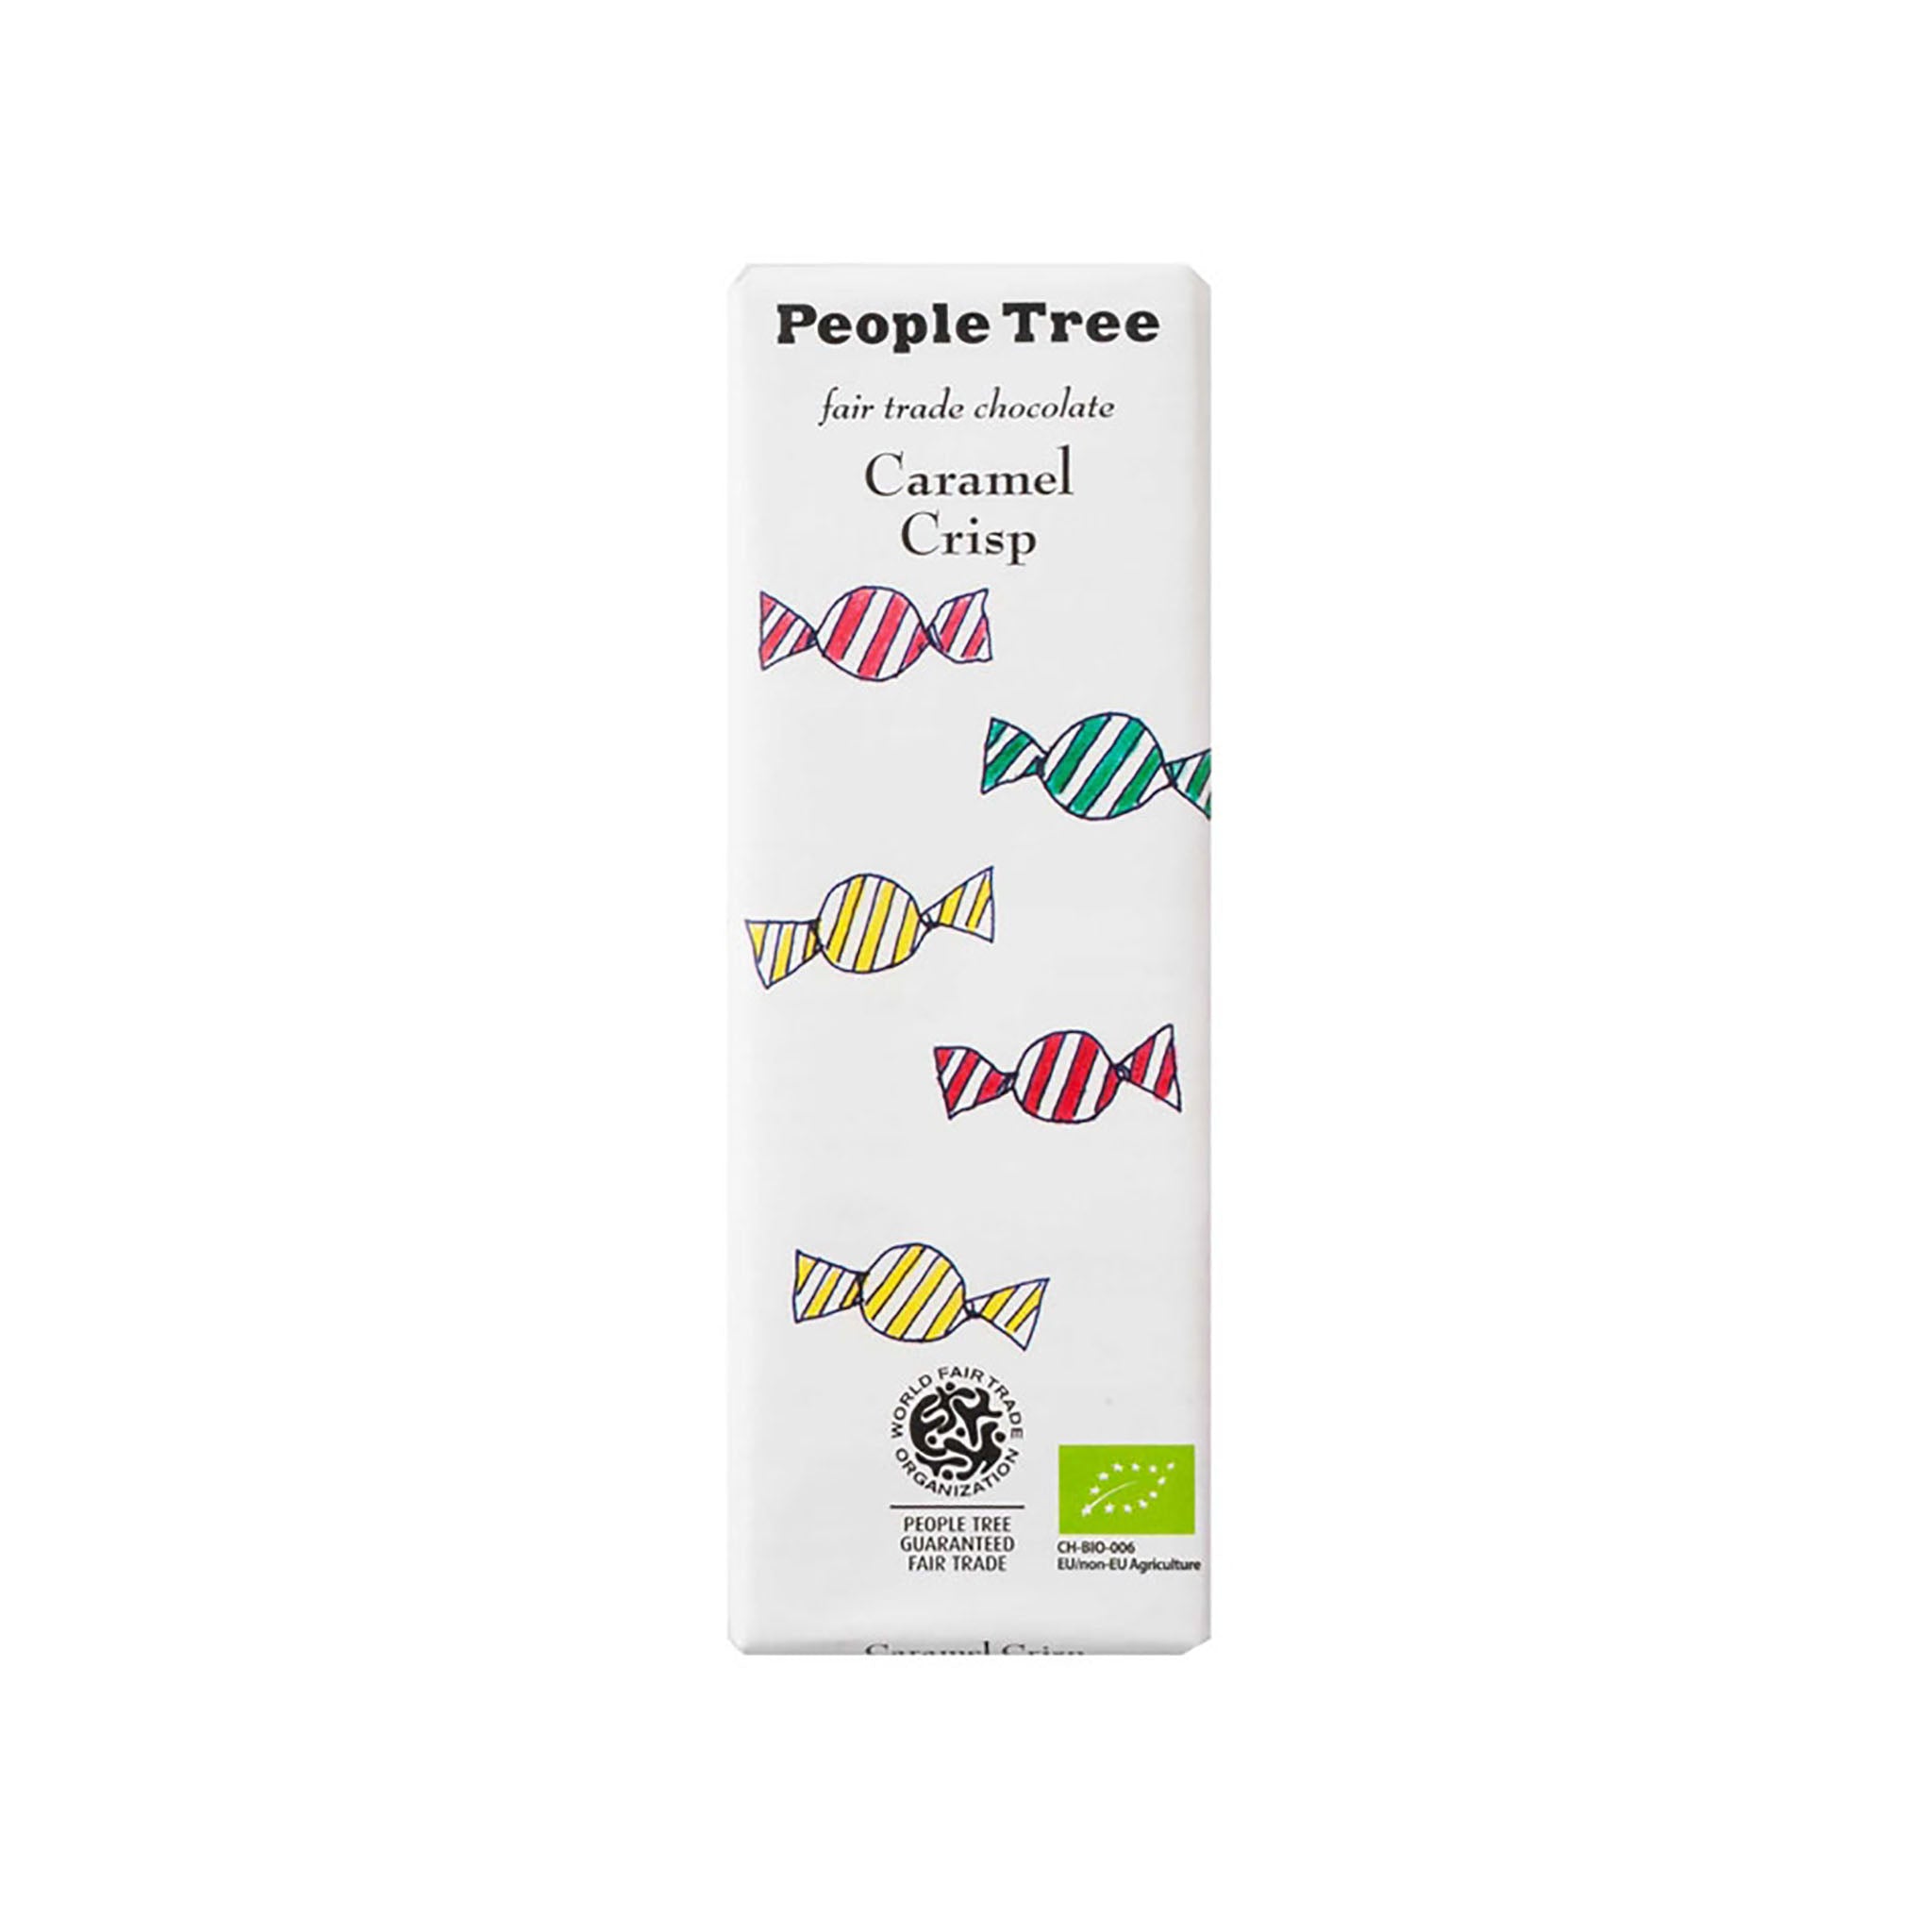 People Tree フェアトレードチョコレートオーガニック抹茶ホワイト 